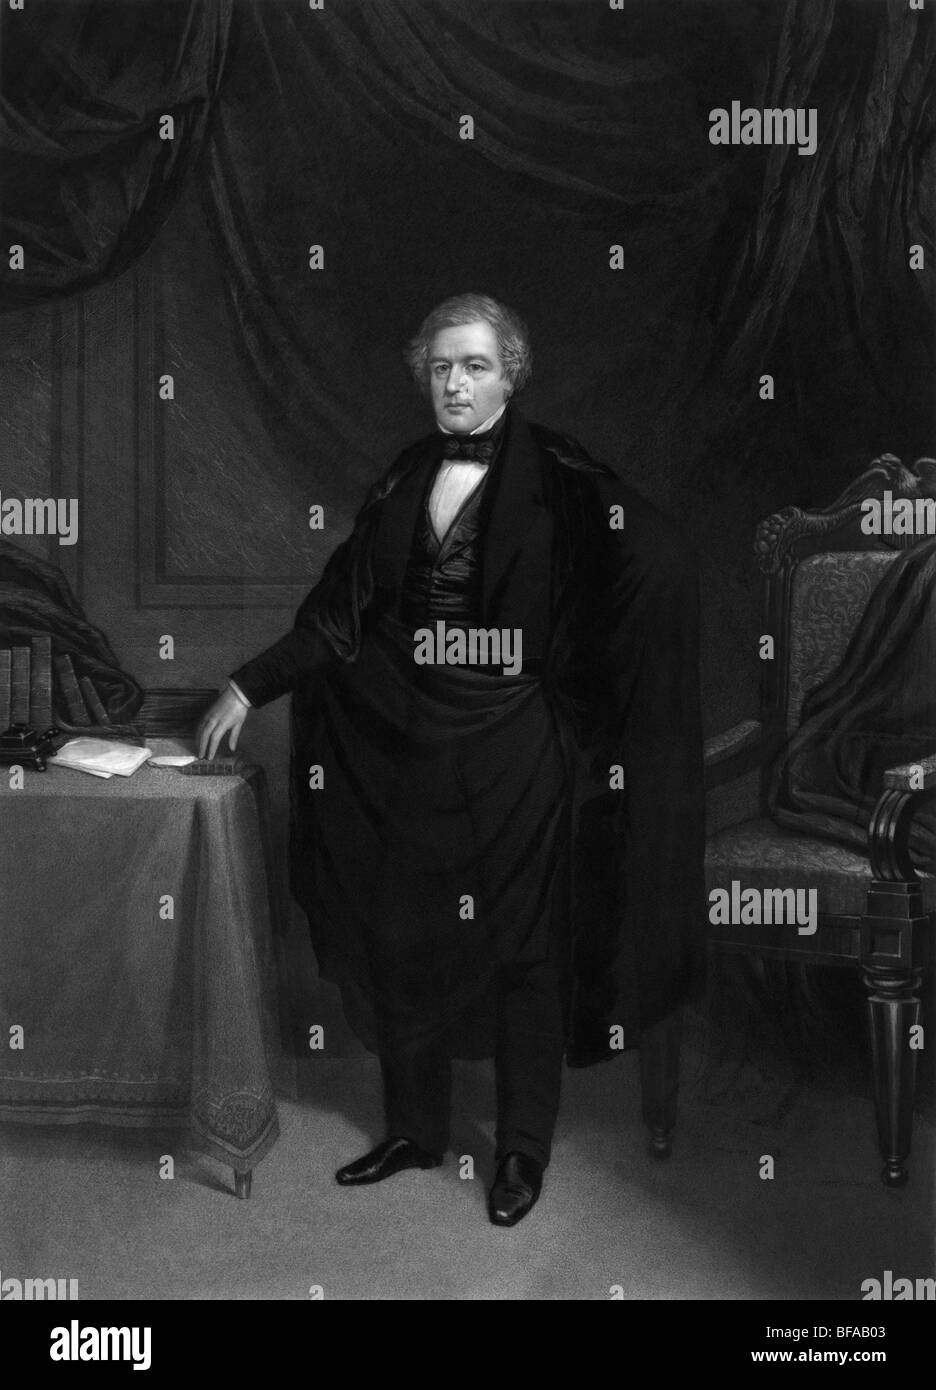 Hochformat ca. 1850 von Millard Fillmore - Fillmore (1800-1874) war der 13. Präsident der USA (1850-1853). Stockfoto